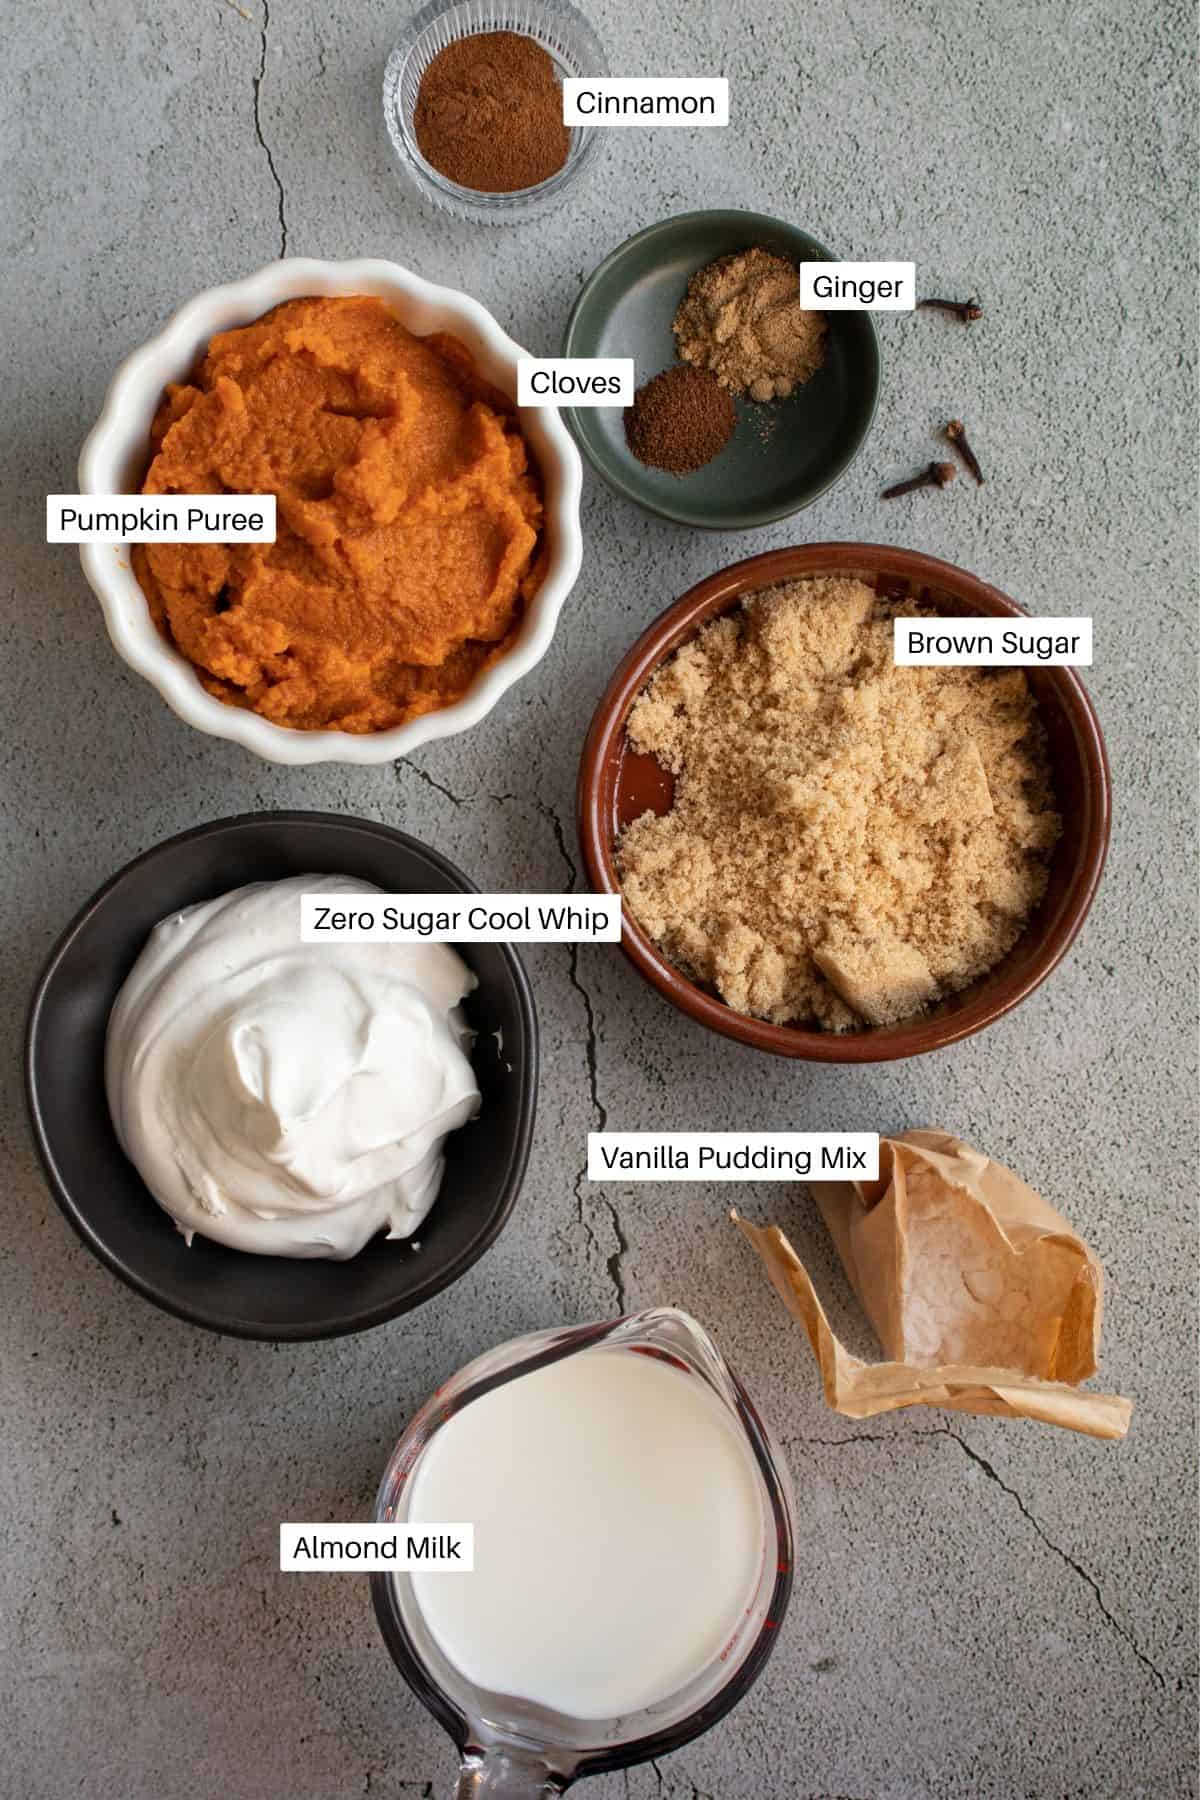 Bowls of ingredients including brown sugar, cinnamon, and almond milk.